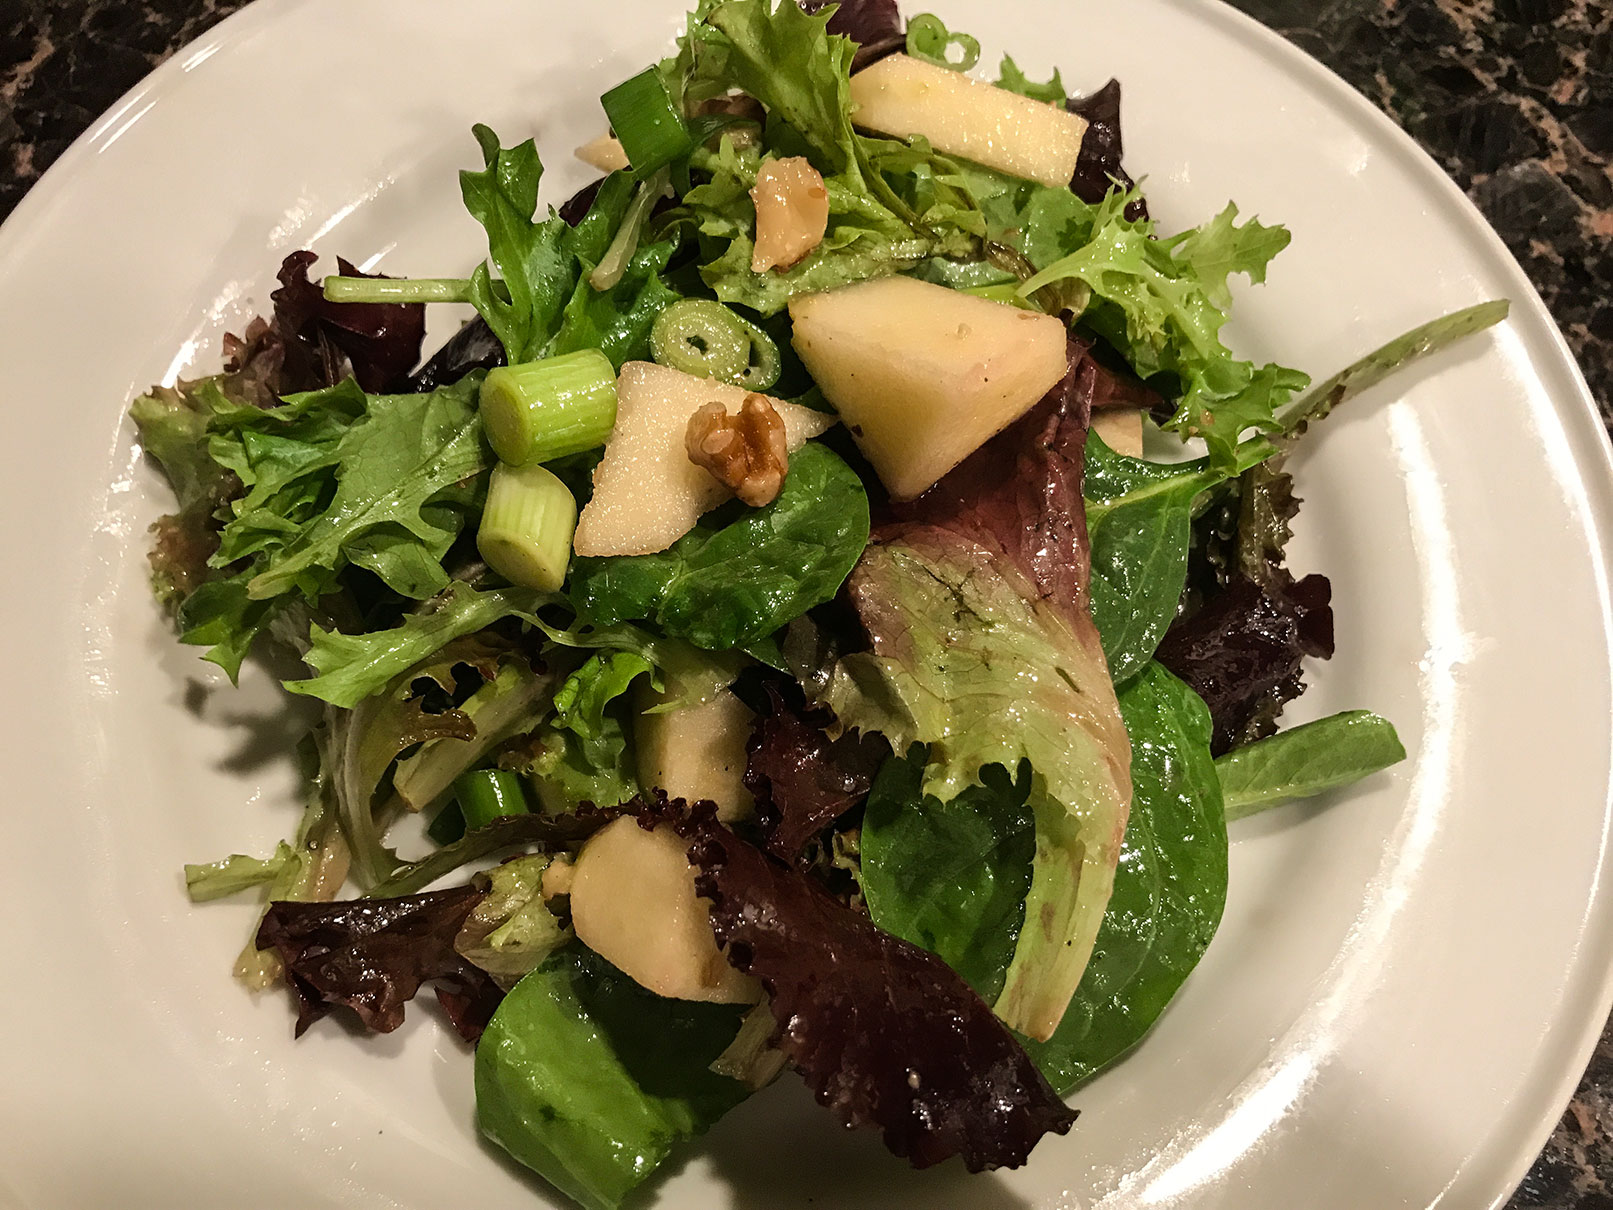 Apple and Walnut Salad with Raspberry Vinaigrette